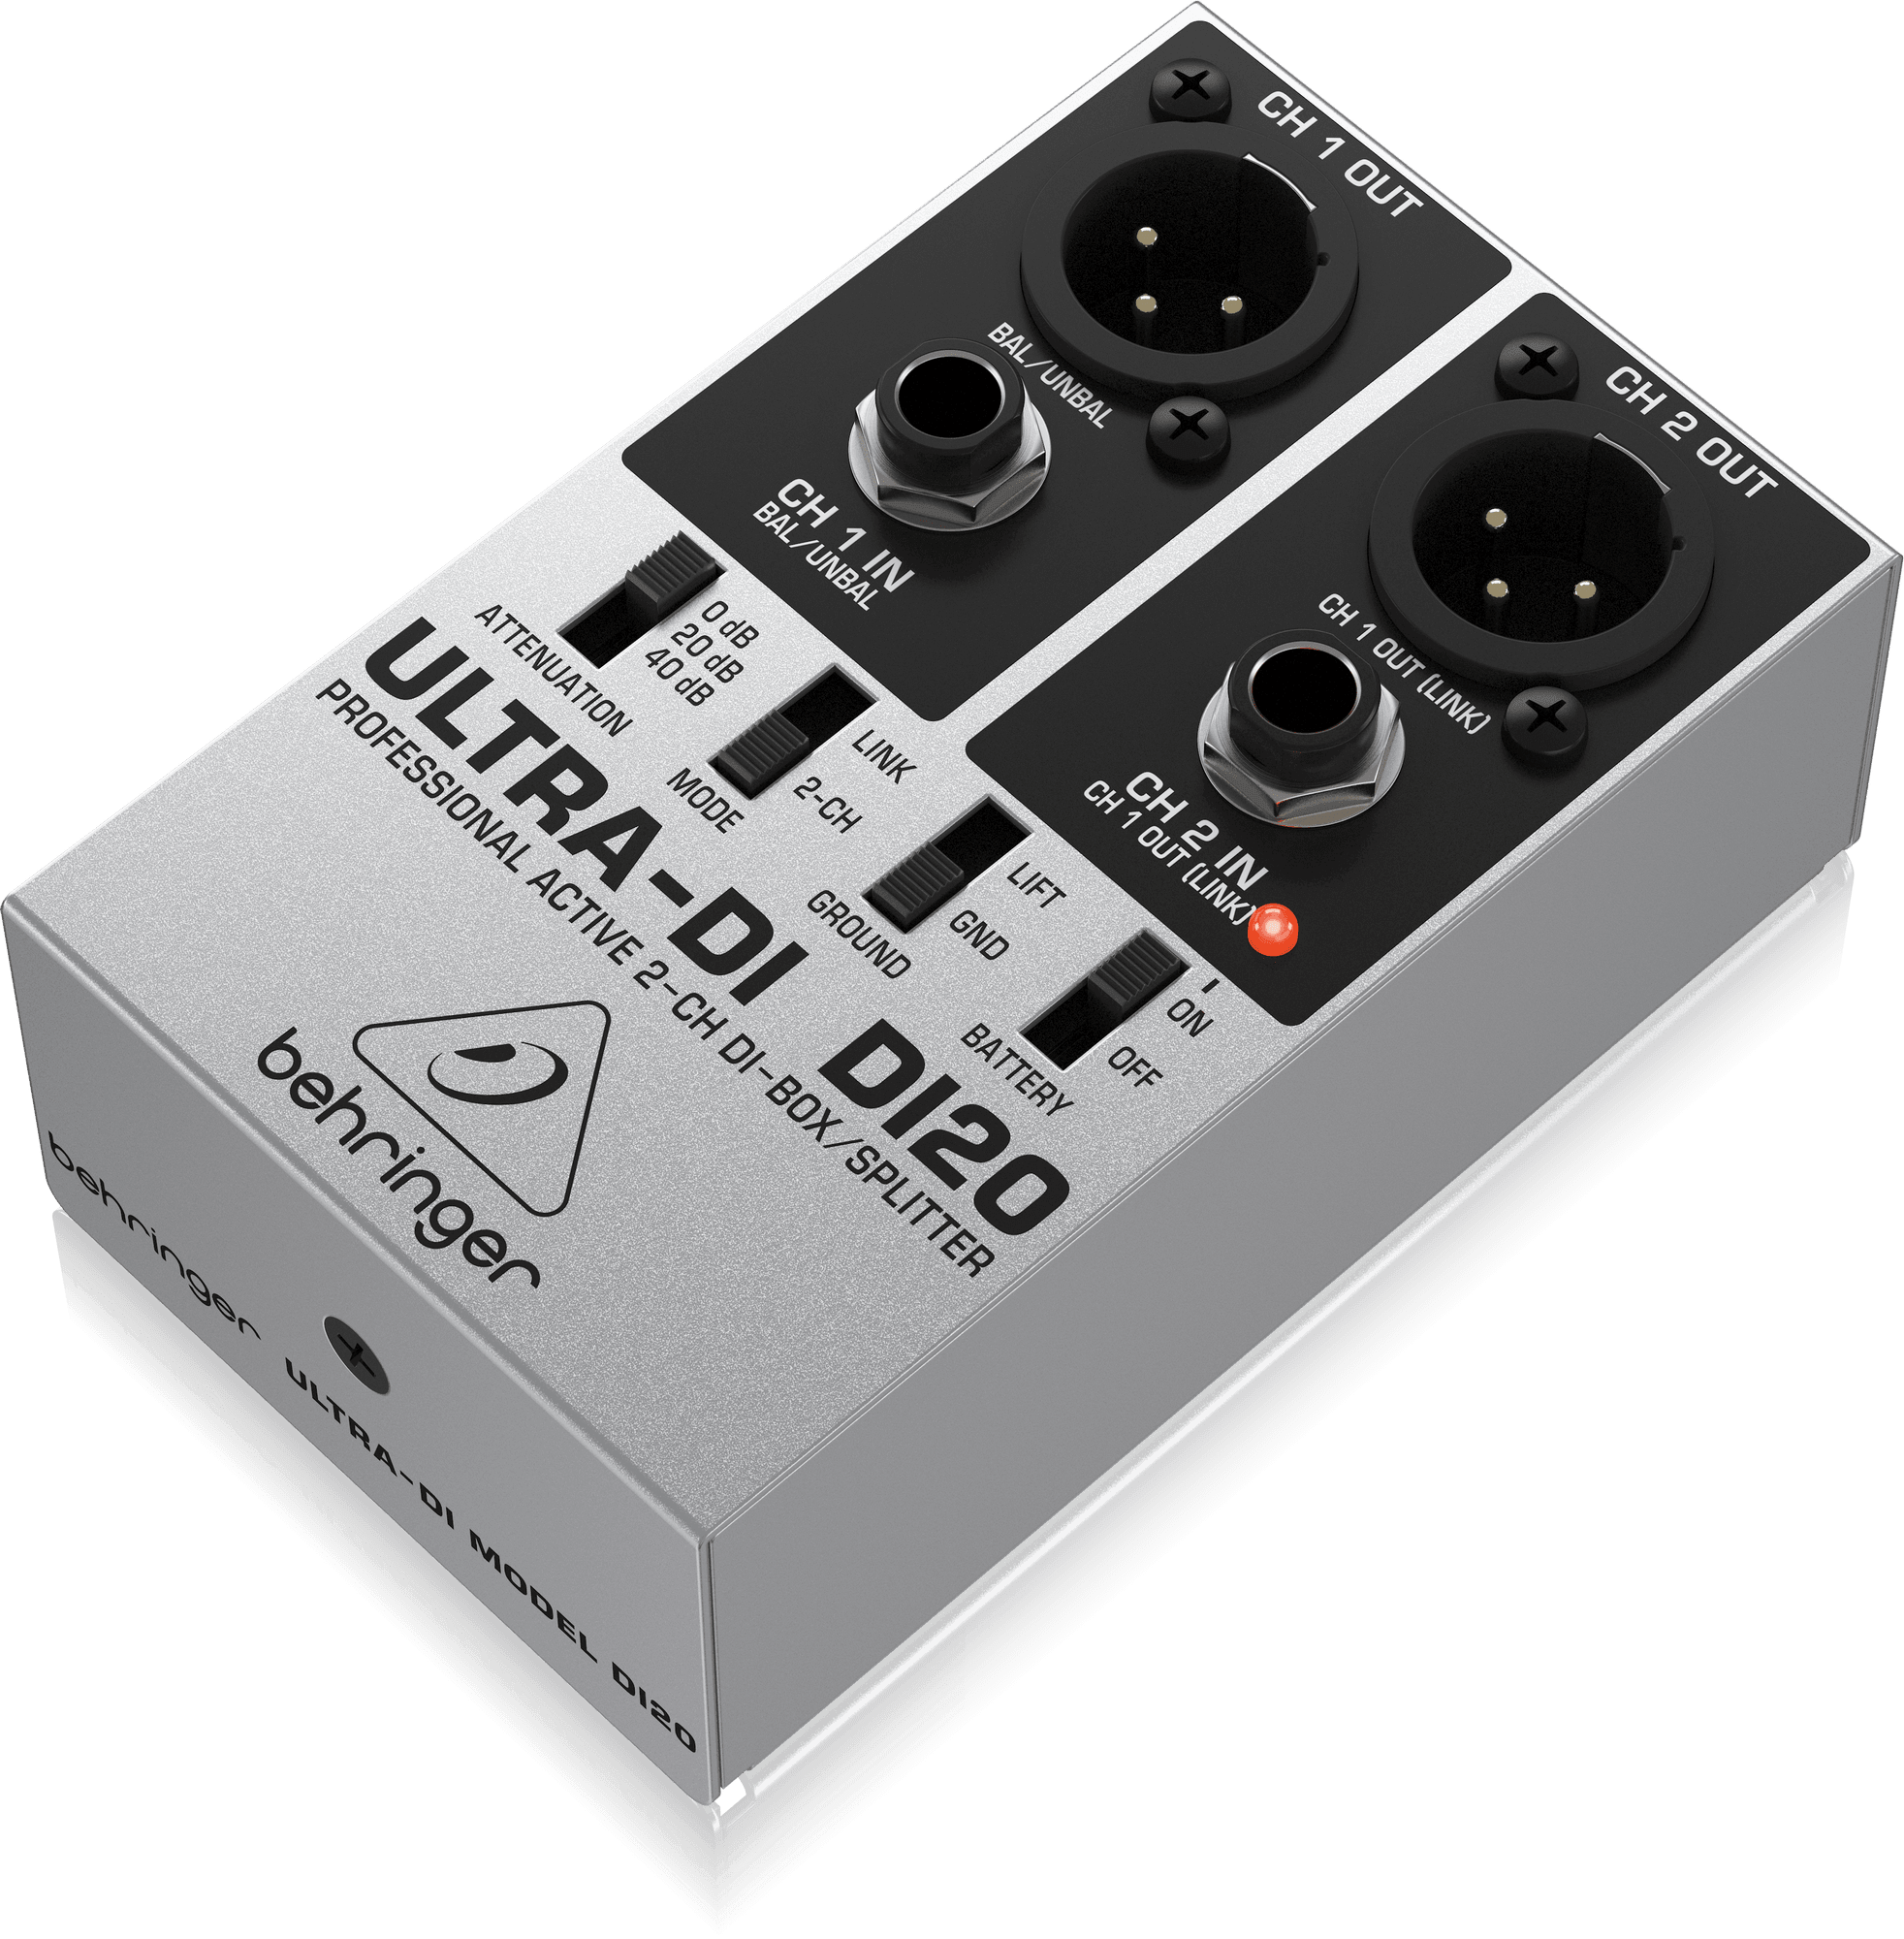 Behringer Ultra-DI DI20 2-channel Active Direct Box / Splitter (DI-20) | BEHRINGER , Zoso Music